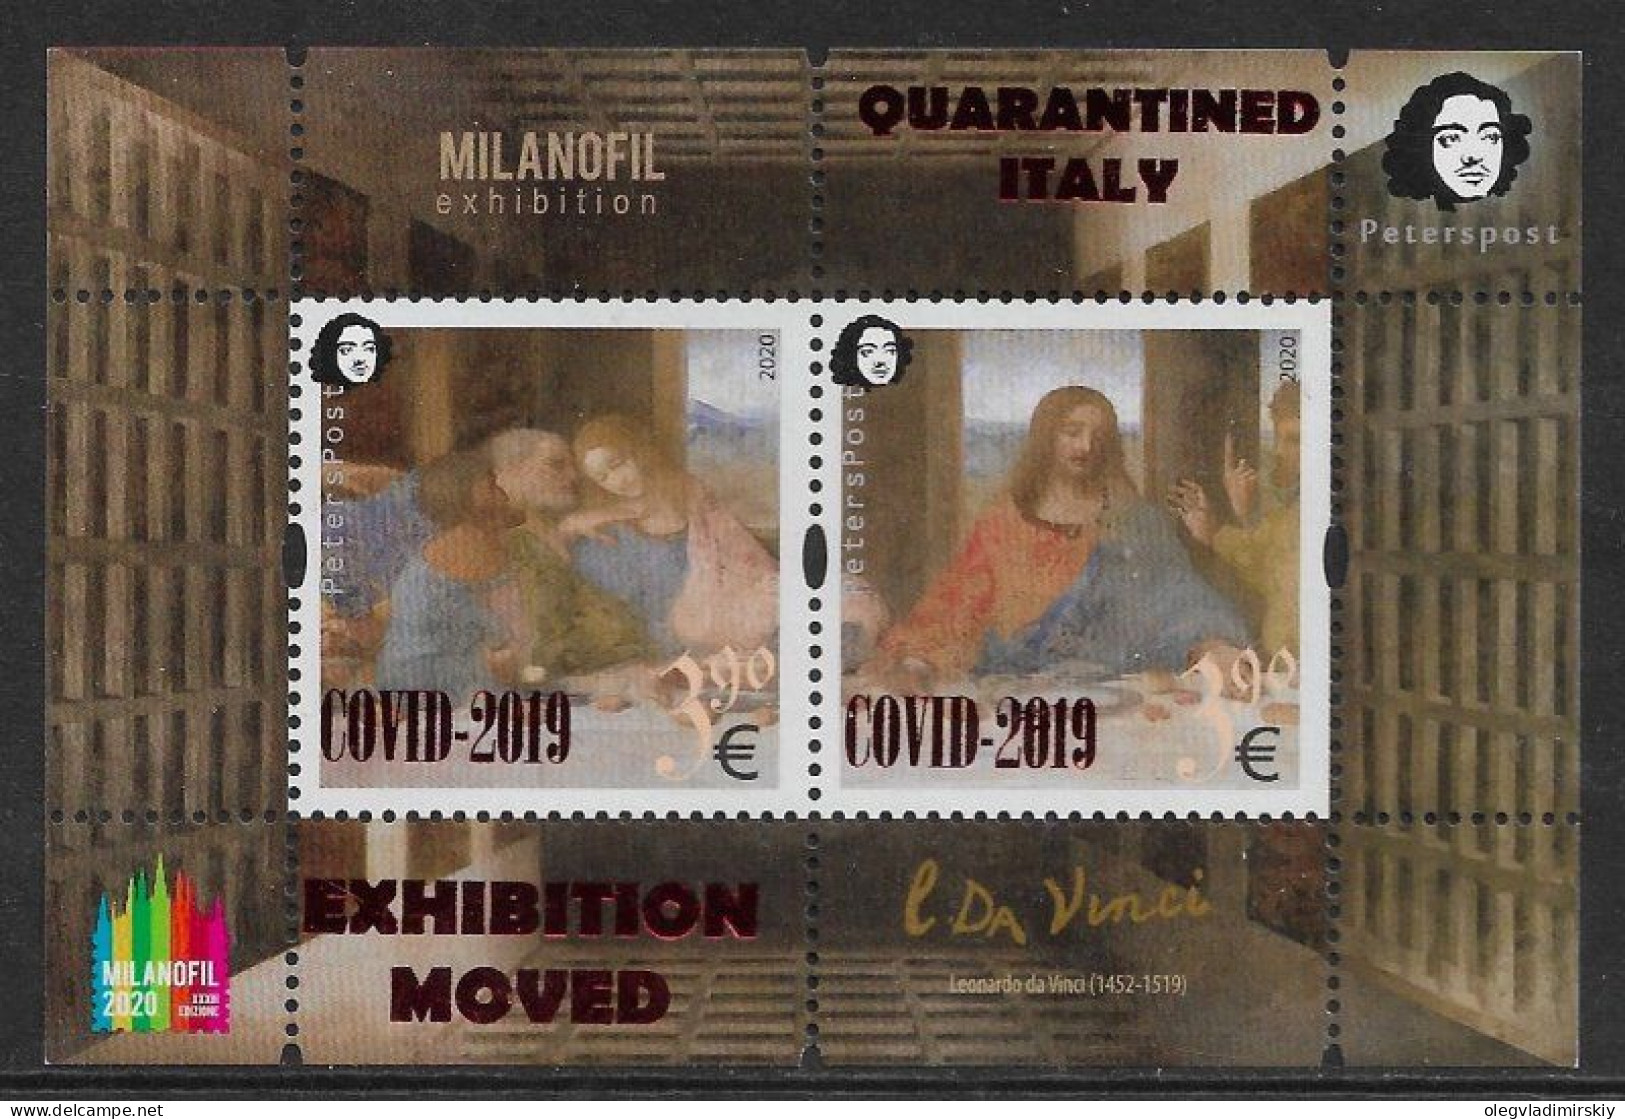 Finland 2020 Quarantined Italy COVID-2019 Leonardo Da Vinci MILANOFIL Exhibition Muved Peterspost Block Overprint MNH - Geneeskunde